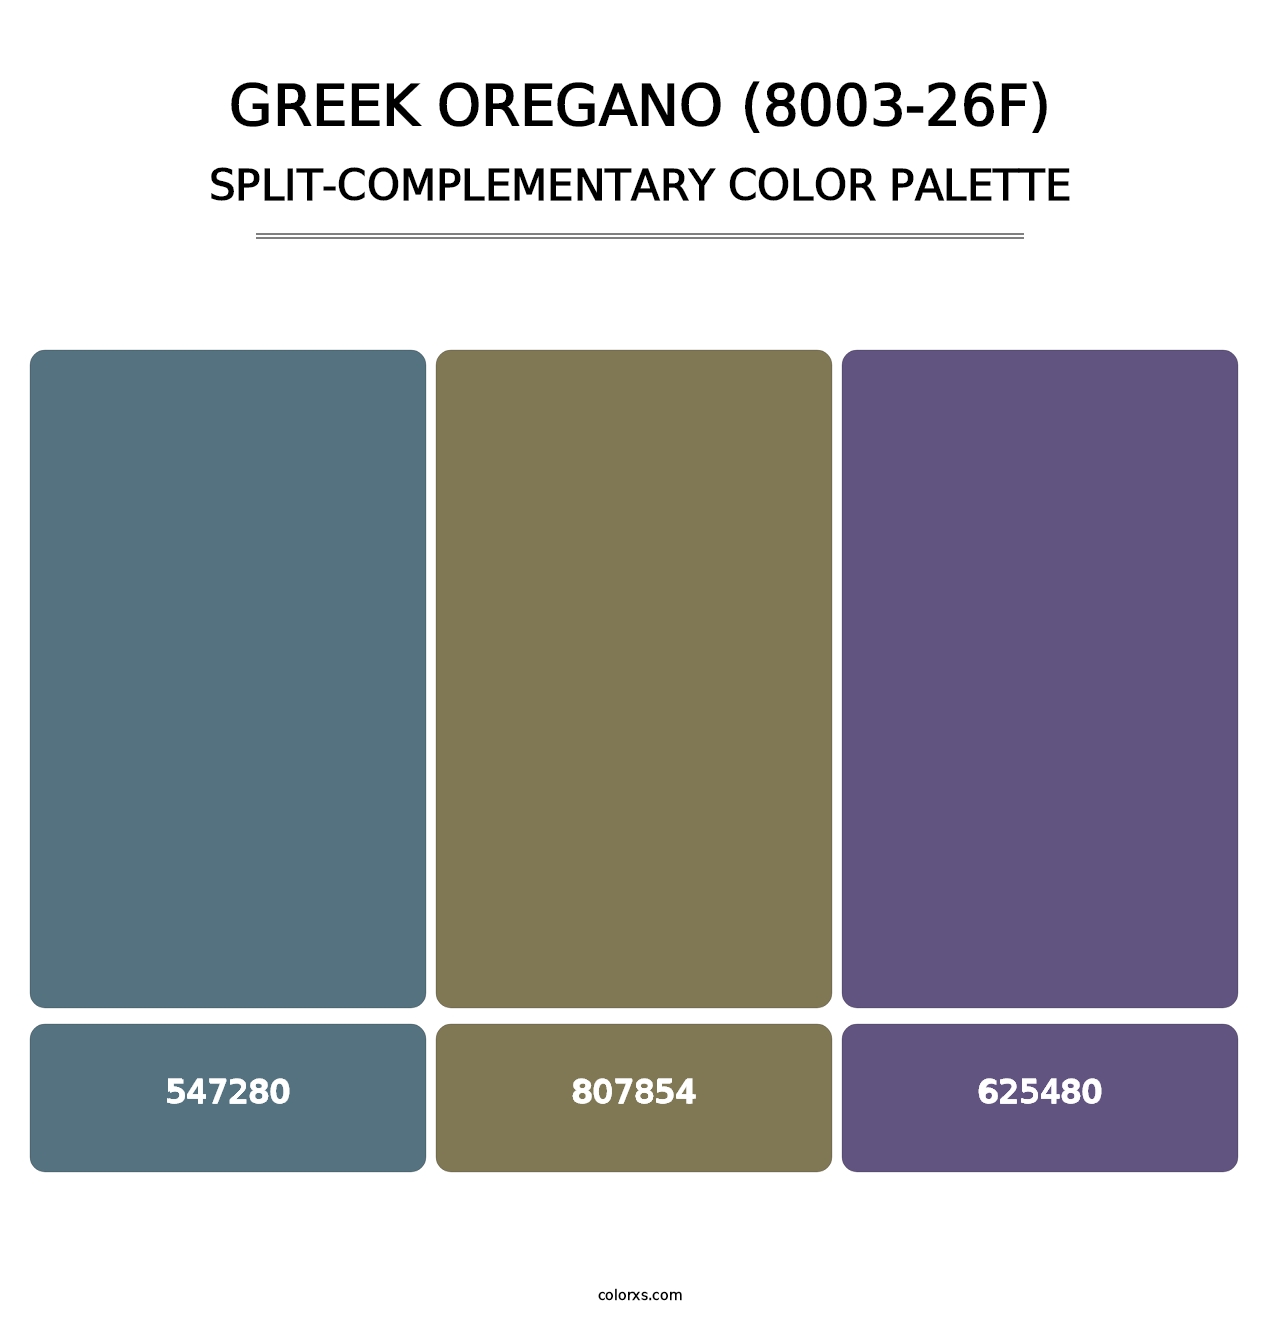 Greek Oregano (8003-26F) - Split-Complementary Color Palette